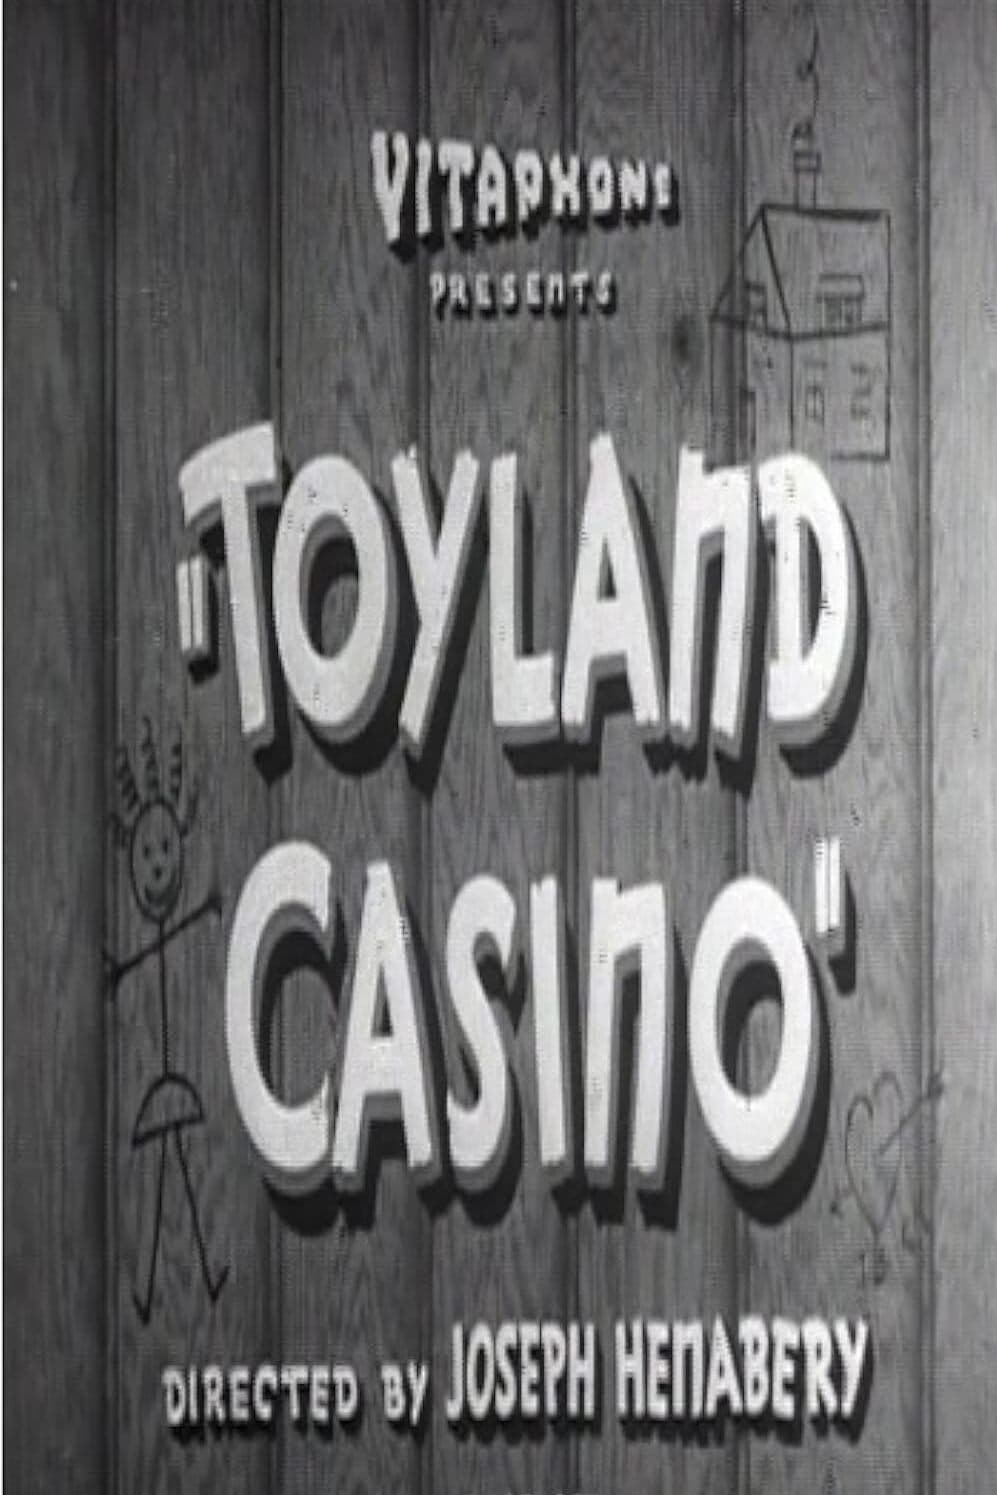 Toyland Casino